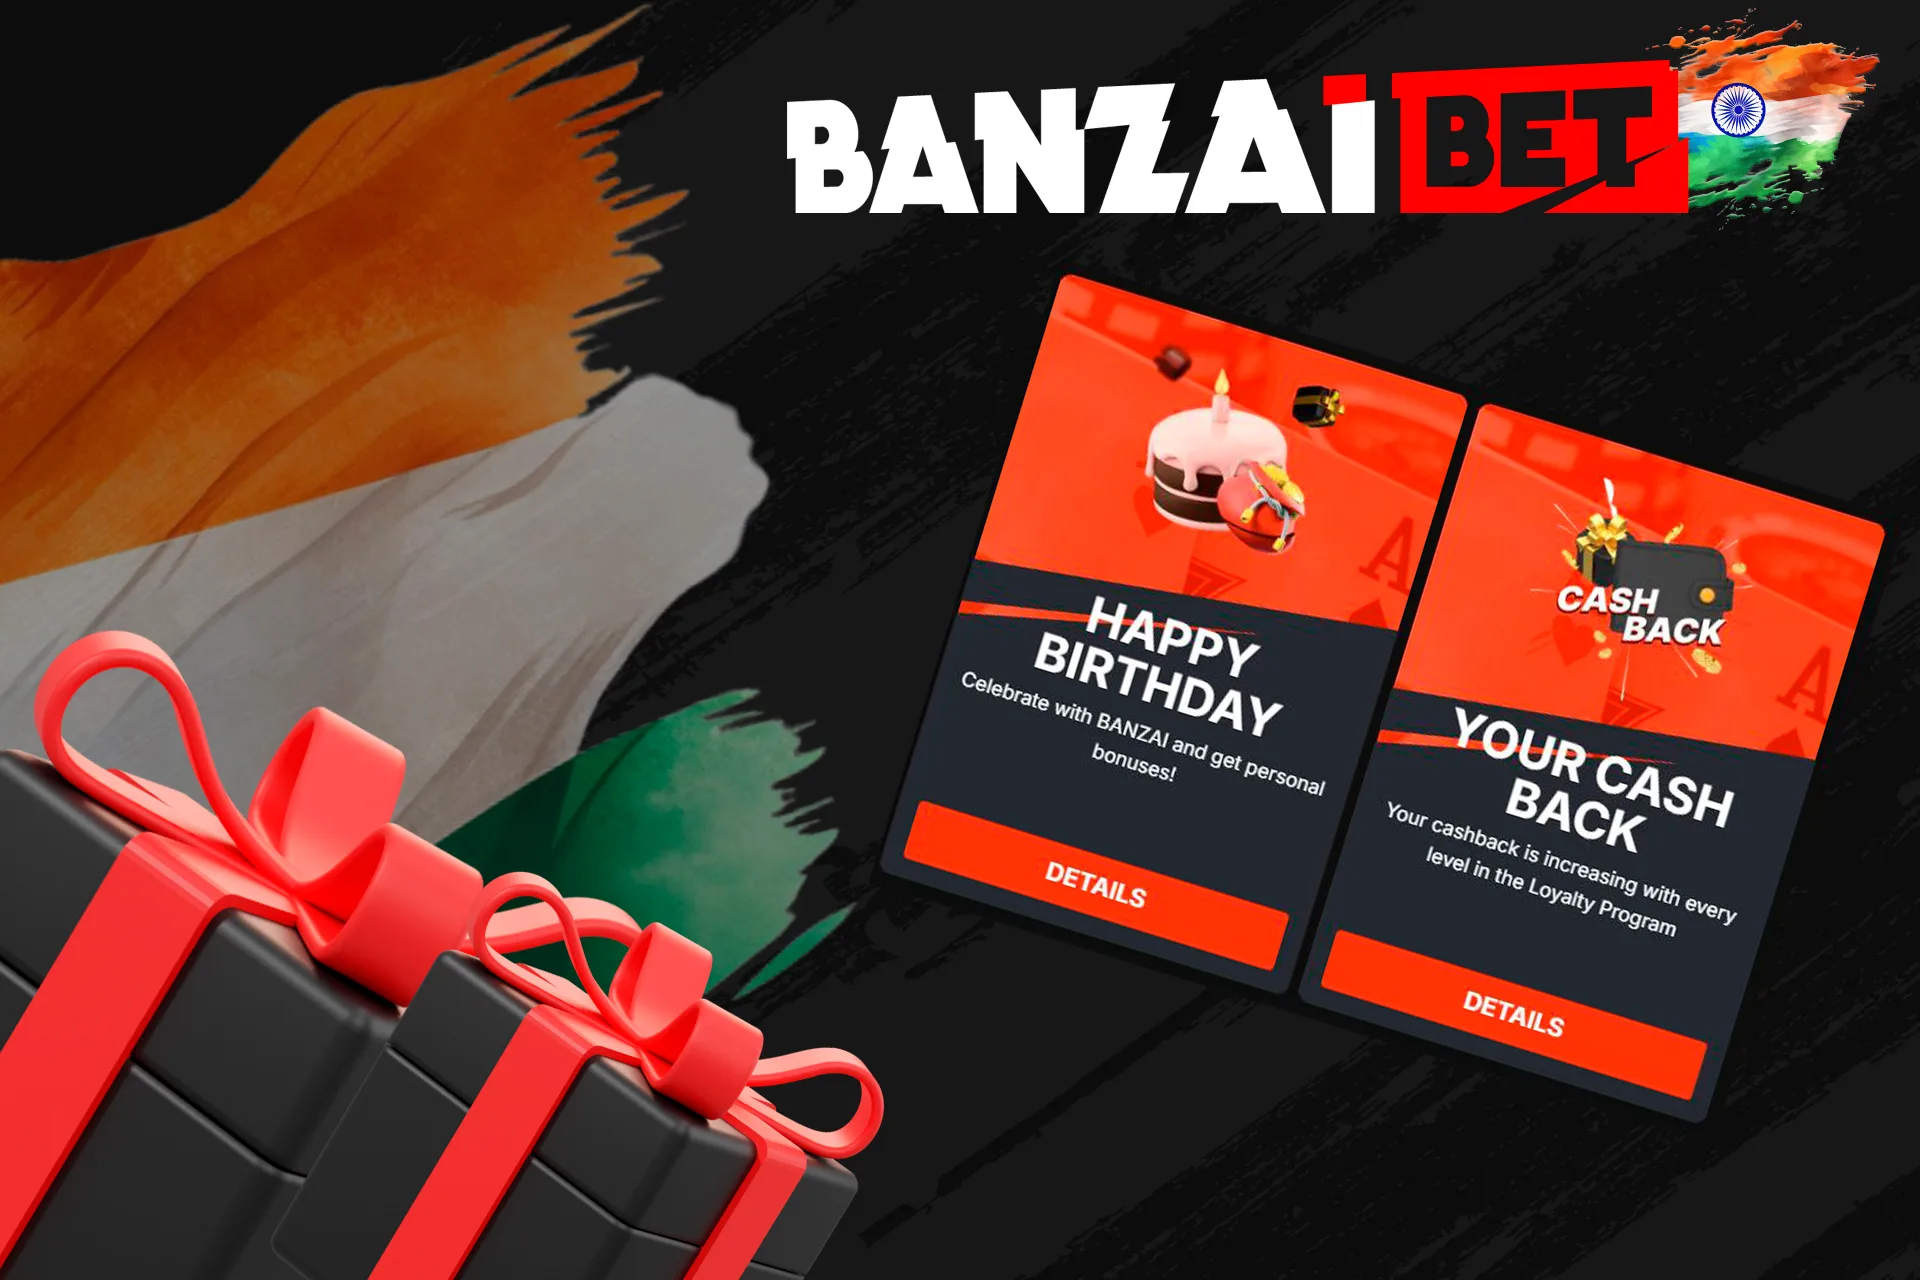 Check out other bonuses at Banzaibet India